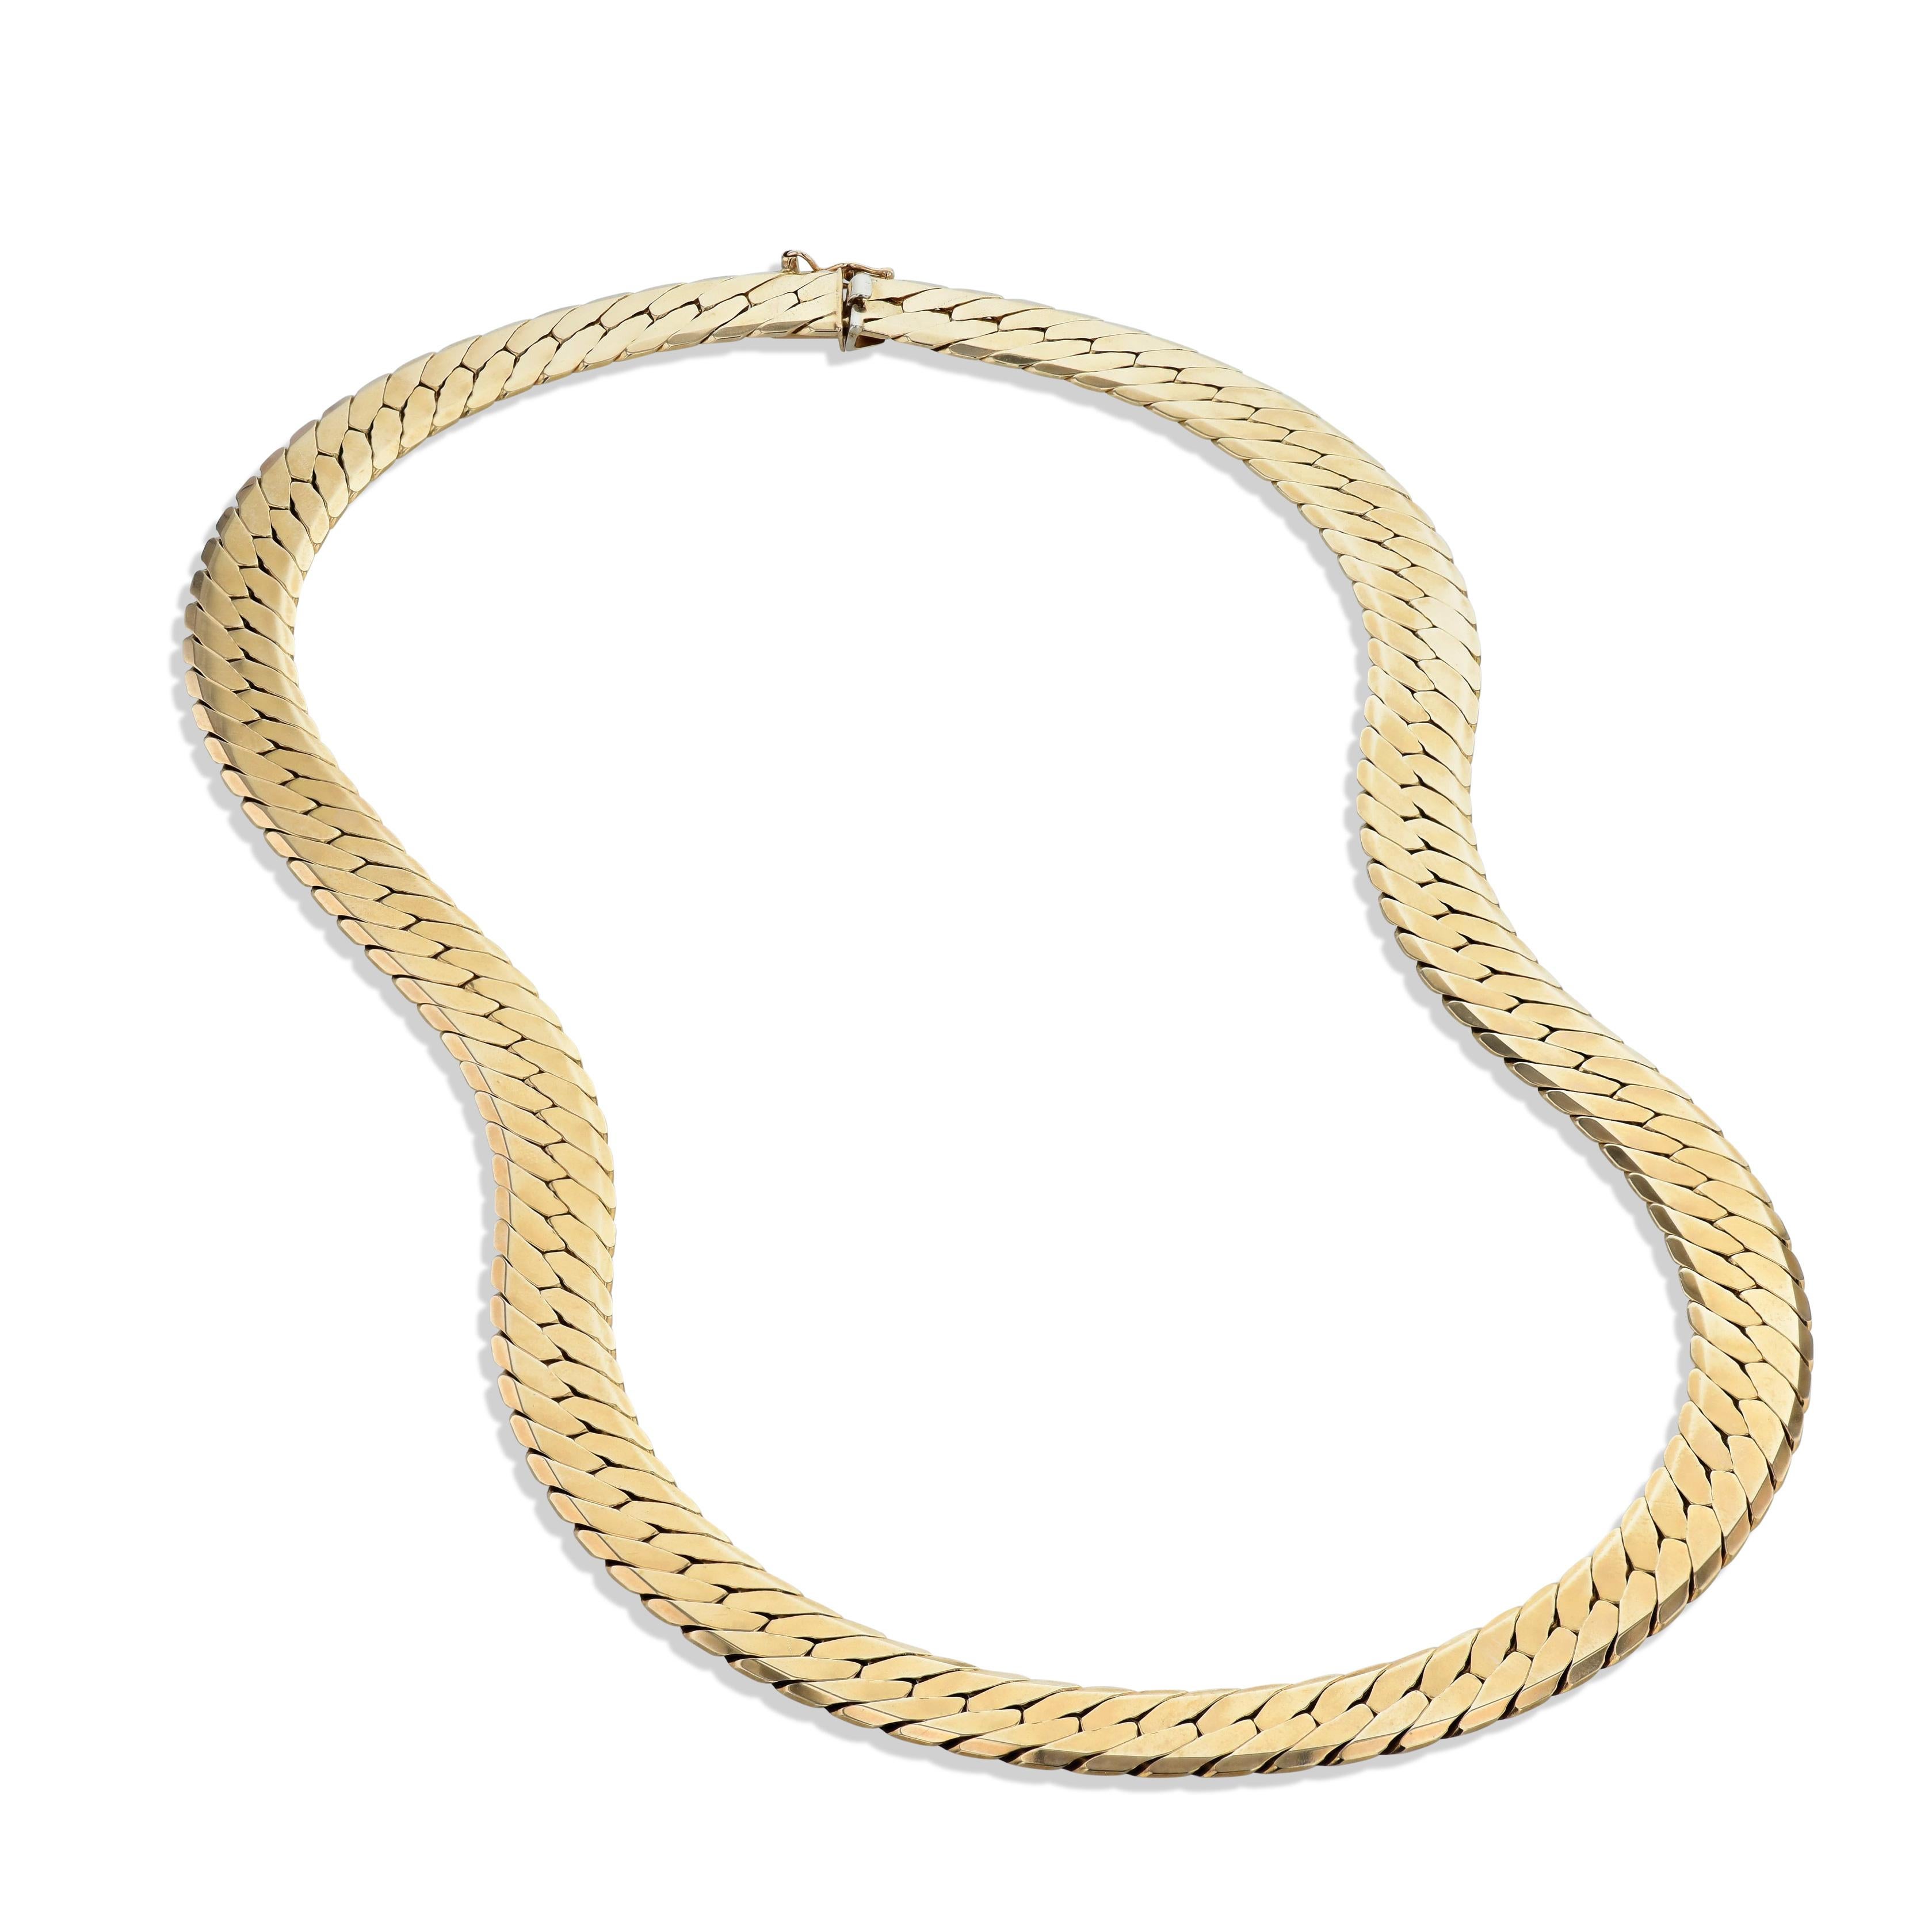 20 inch white gold chain